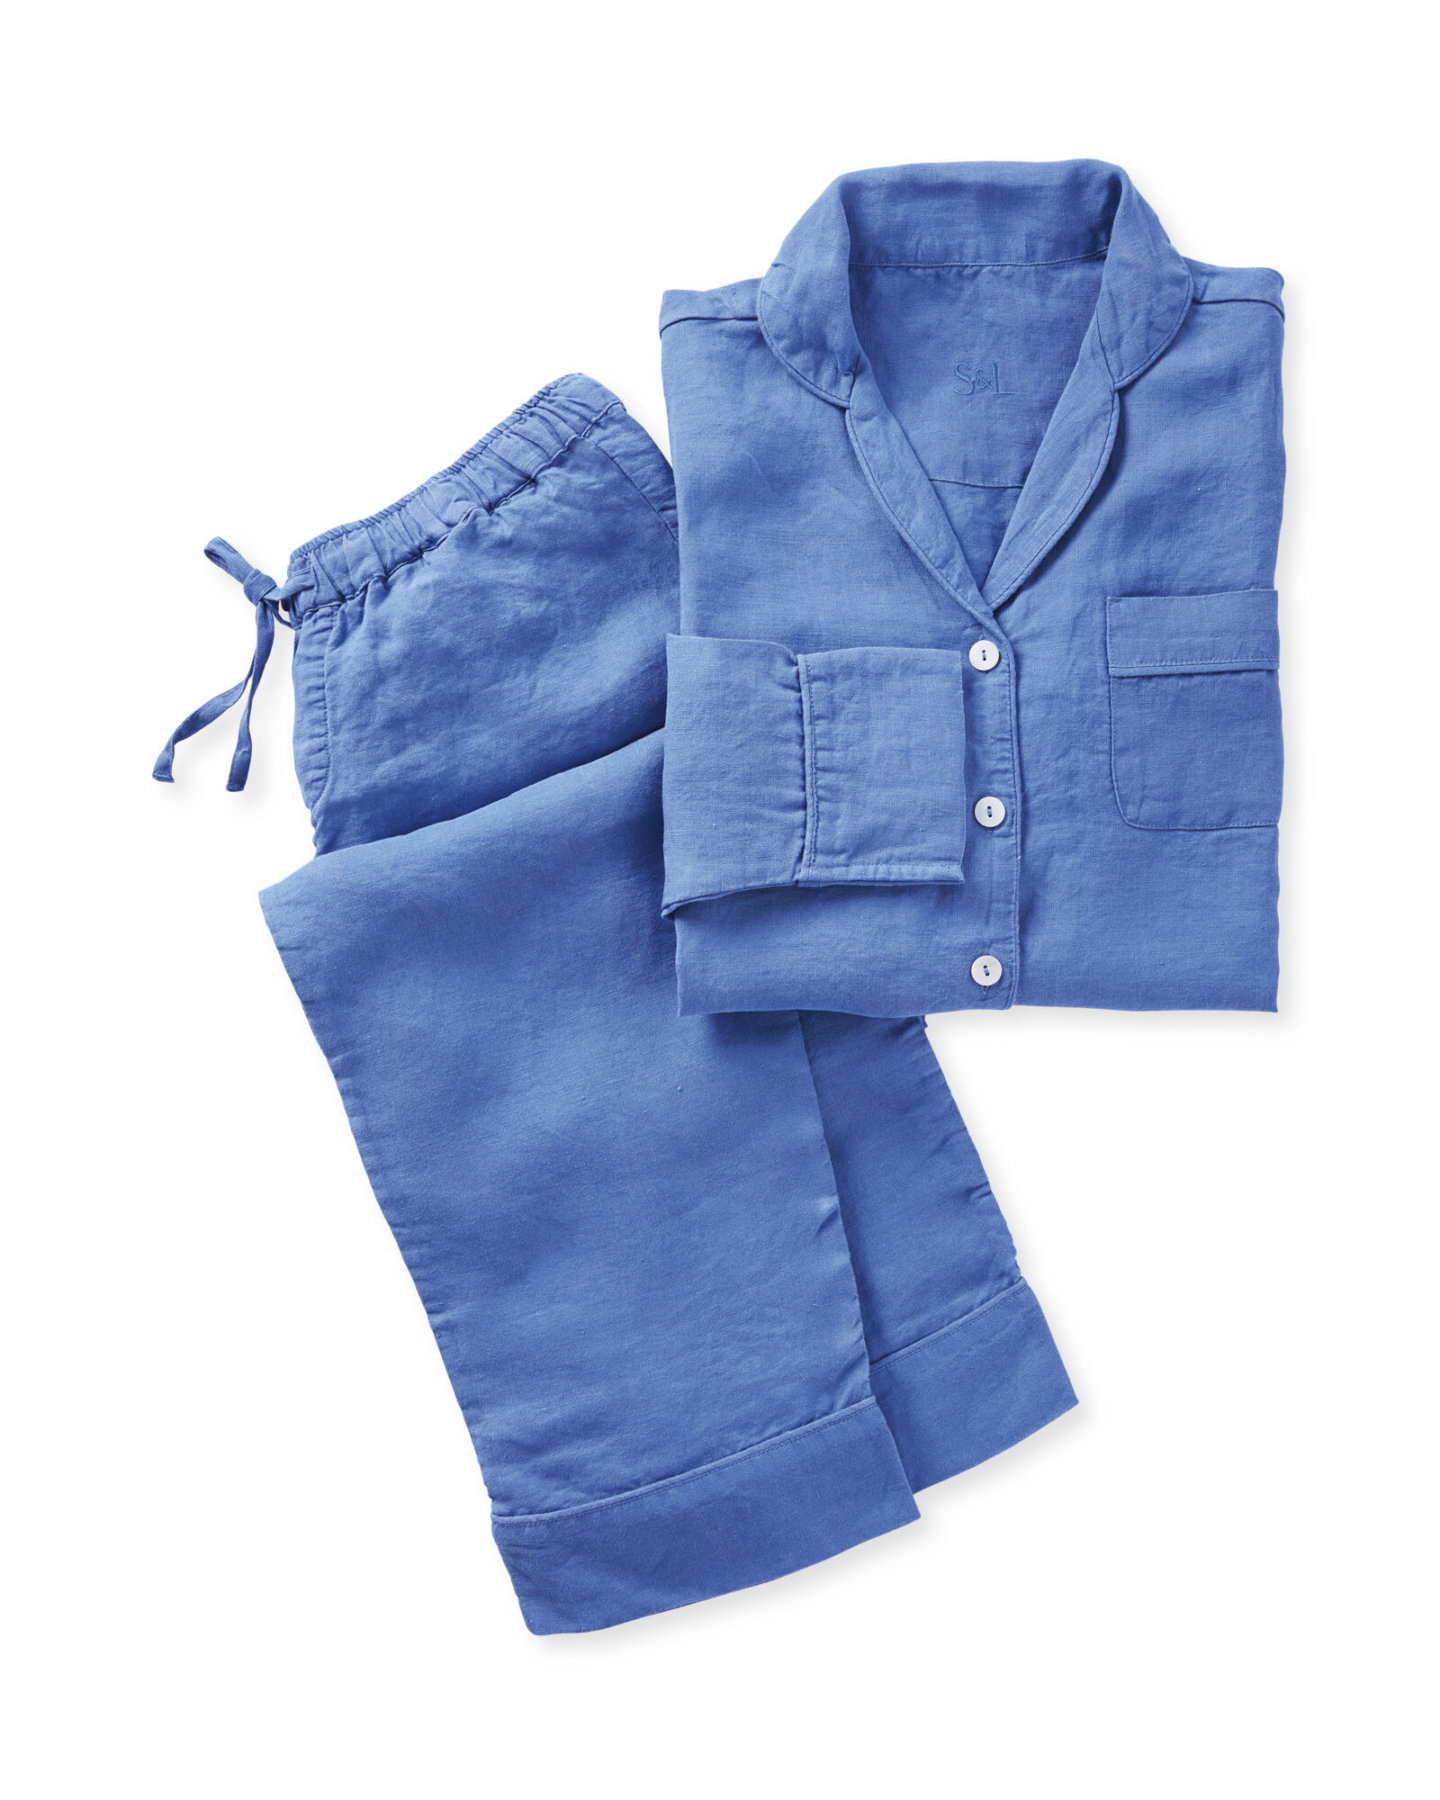 French blue Positano linen pajamas from Serena & Lily! #linenpajamas #frenchblue